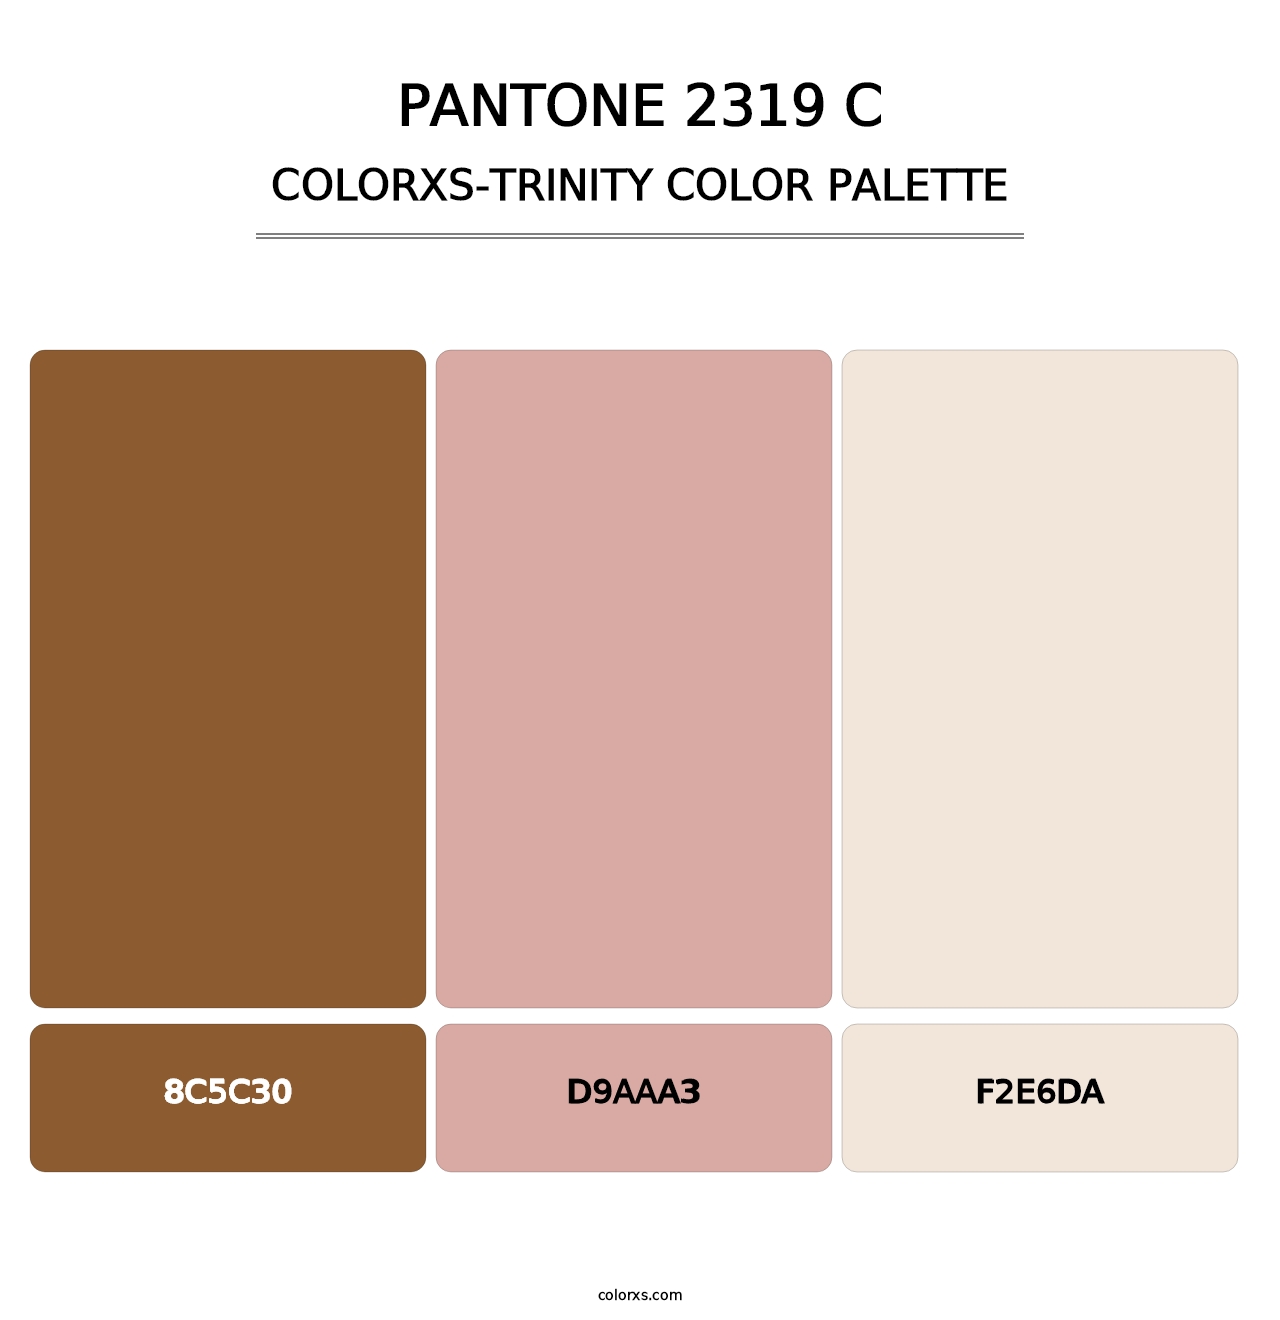 PANTONE 2319 C - Colorxs Trinity Palette